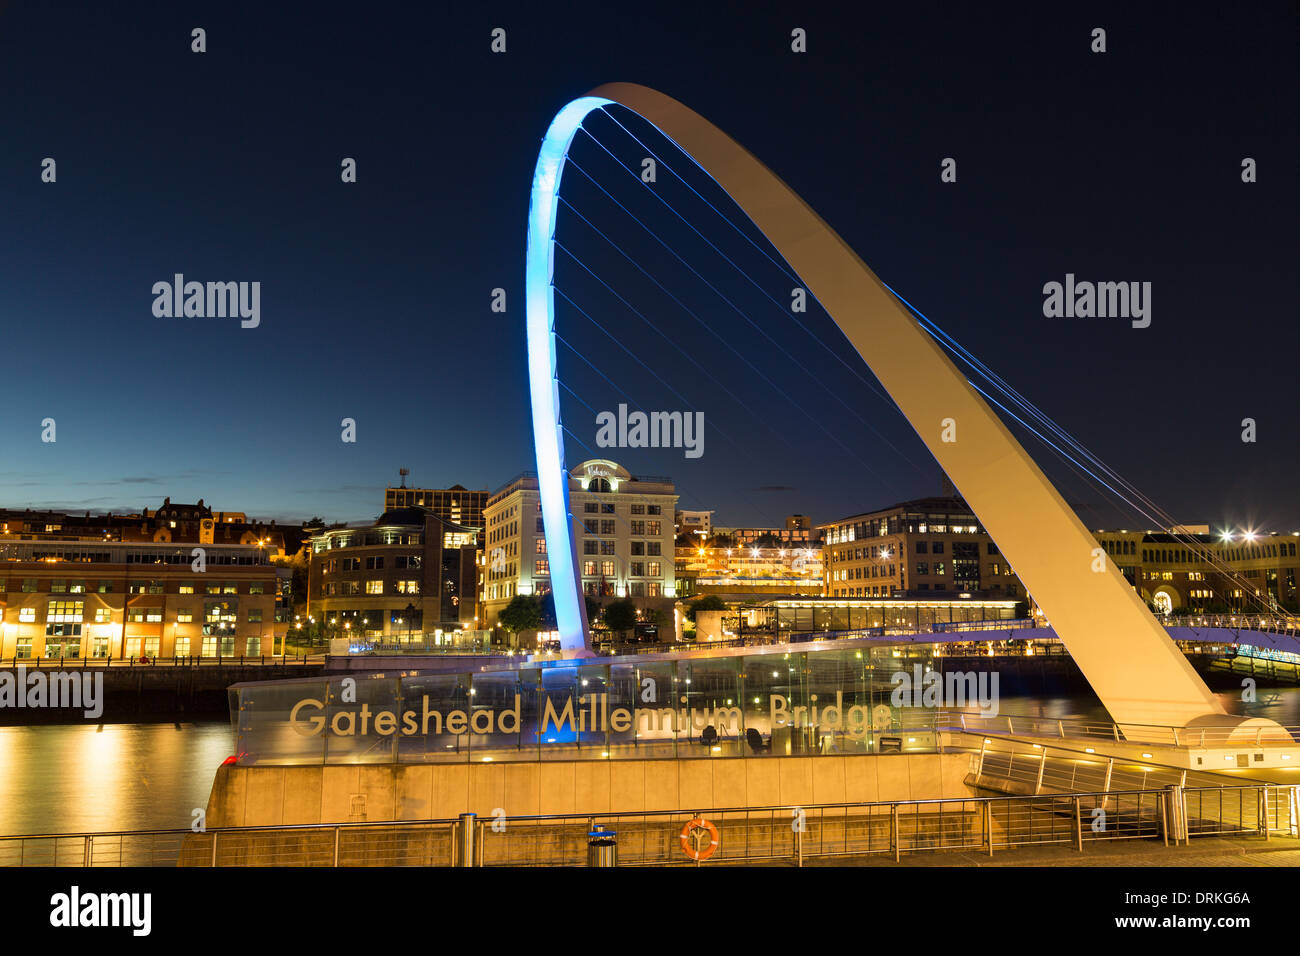 Gateshead Millennium Bridge, Newcastle on Tyne, England Stock Photo